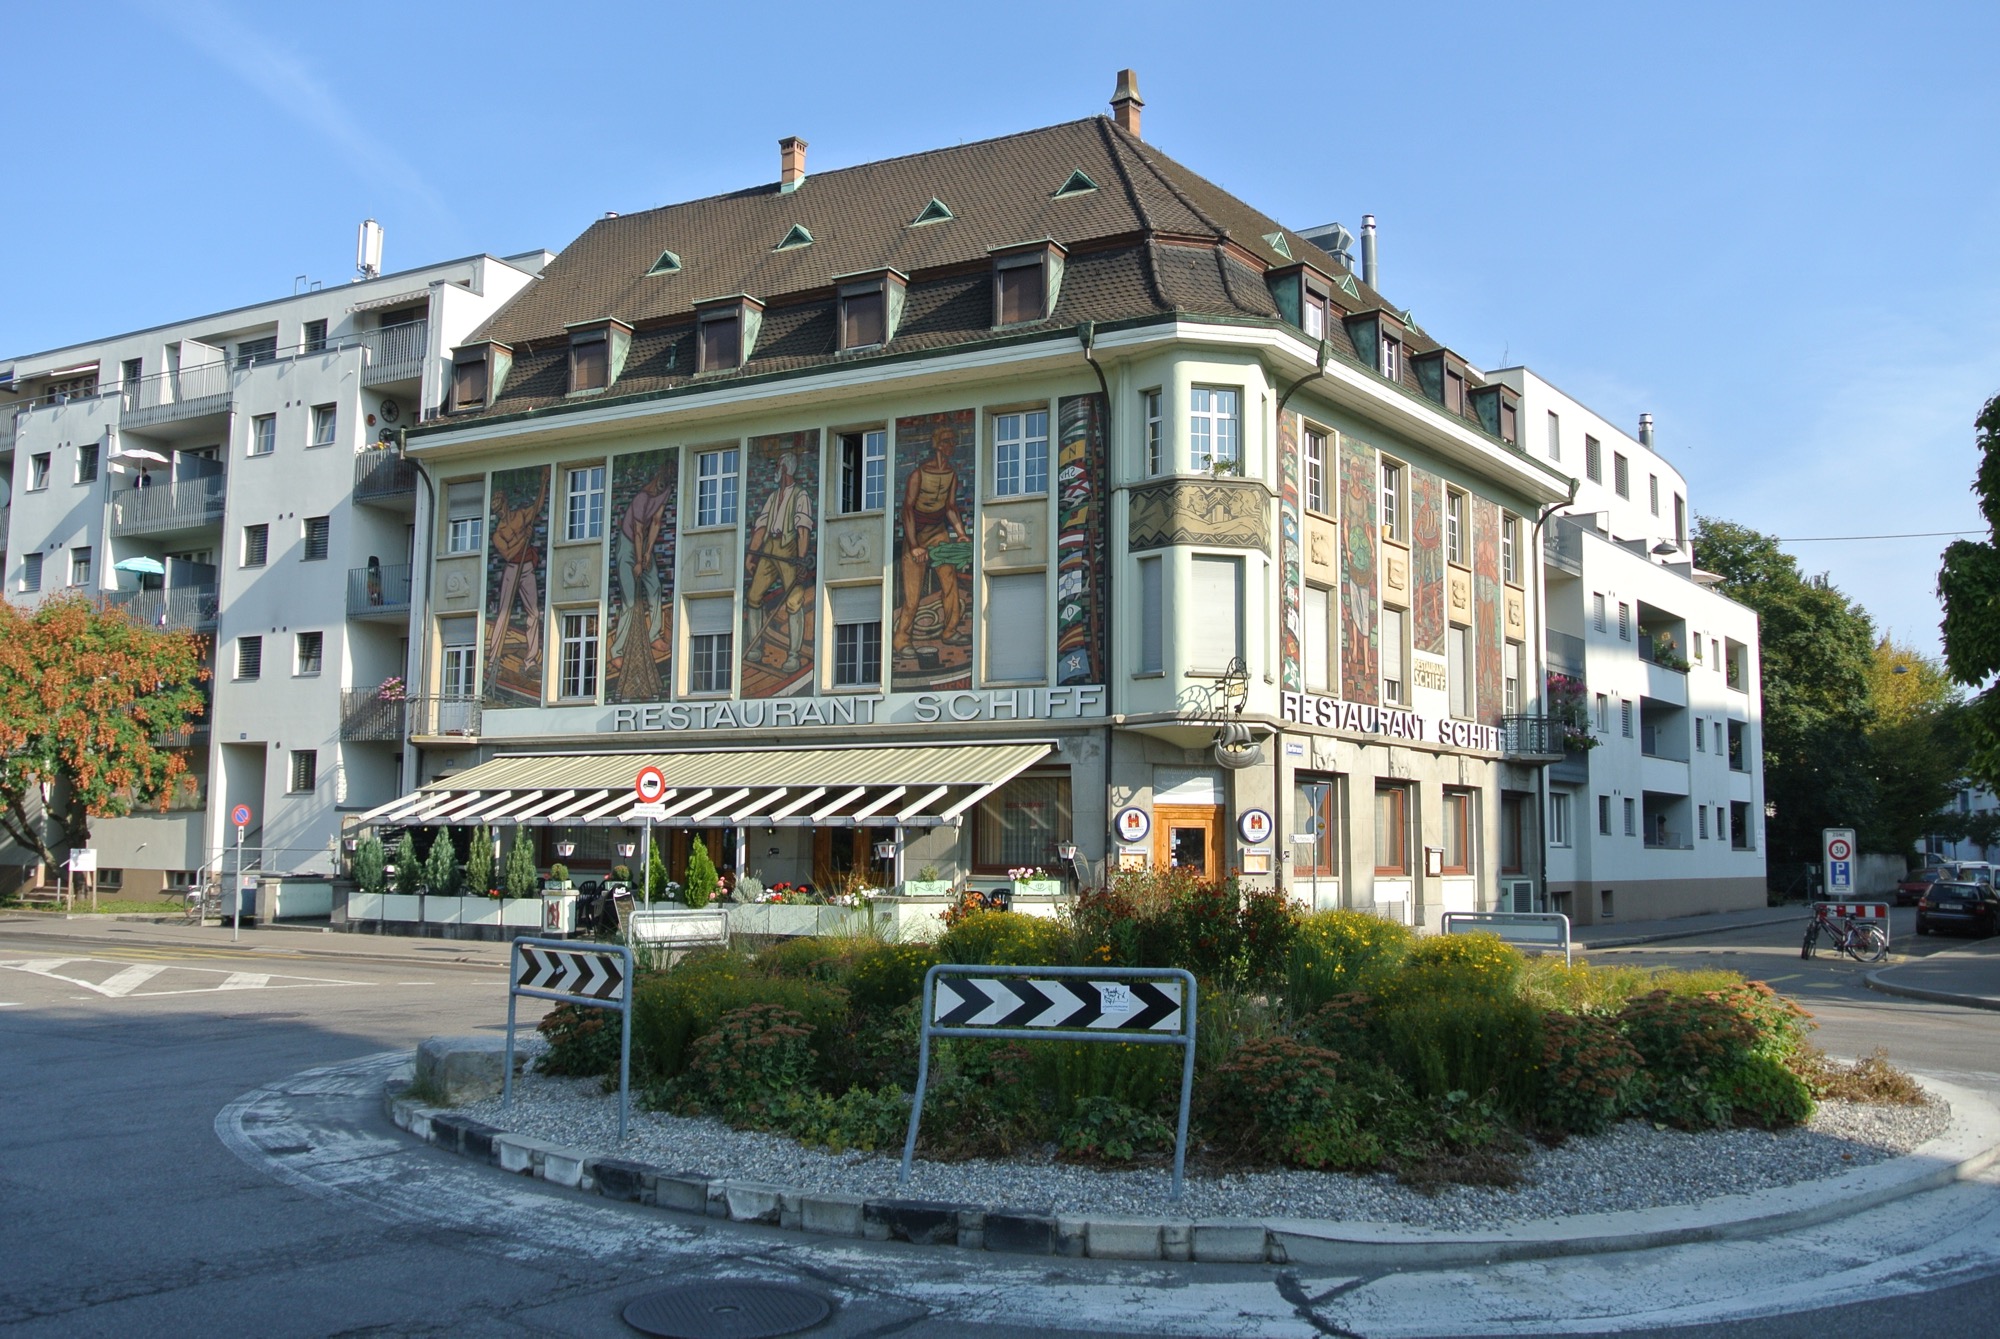 Die monumentalen Fassadenmalereien beim Restaurant Schiff hat Burkhard Mangold 1927 geschaffen.